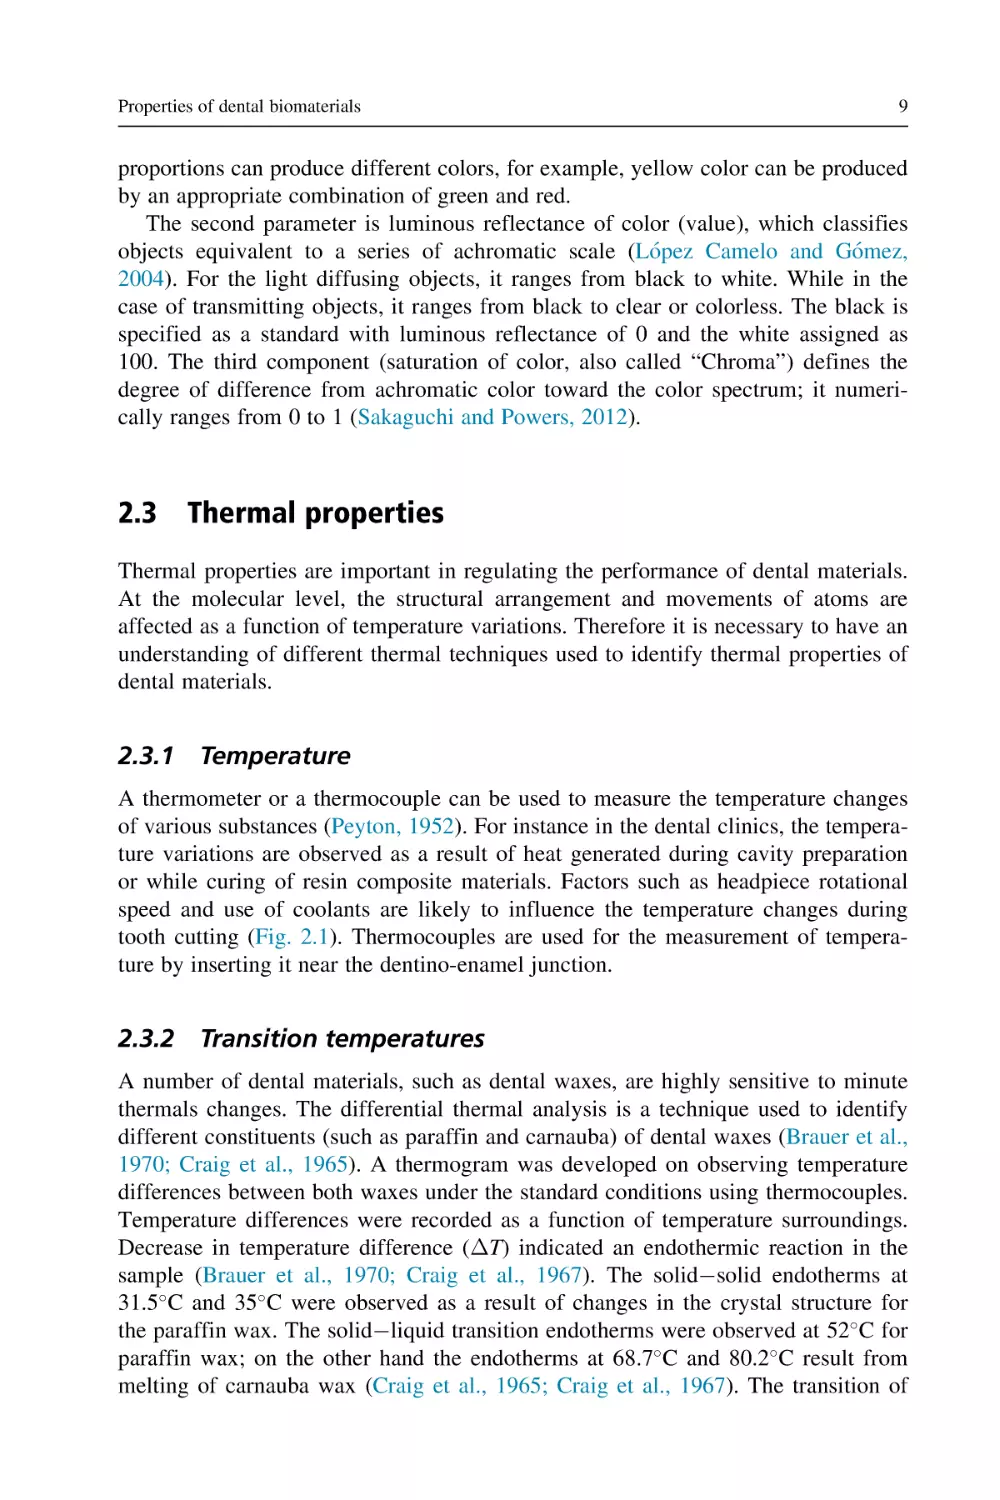 2.3 Thermal properties
2.3.1 Temperature
2.3.2 Transition temperatures